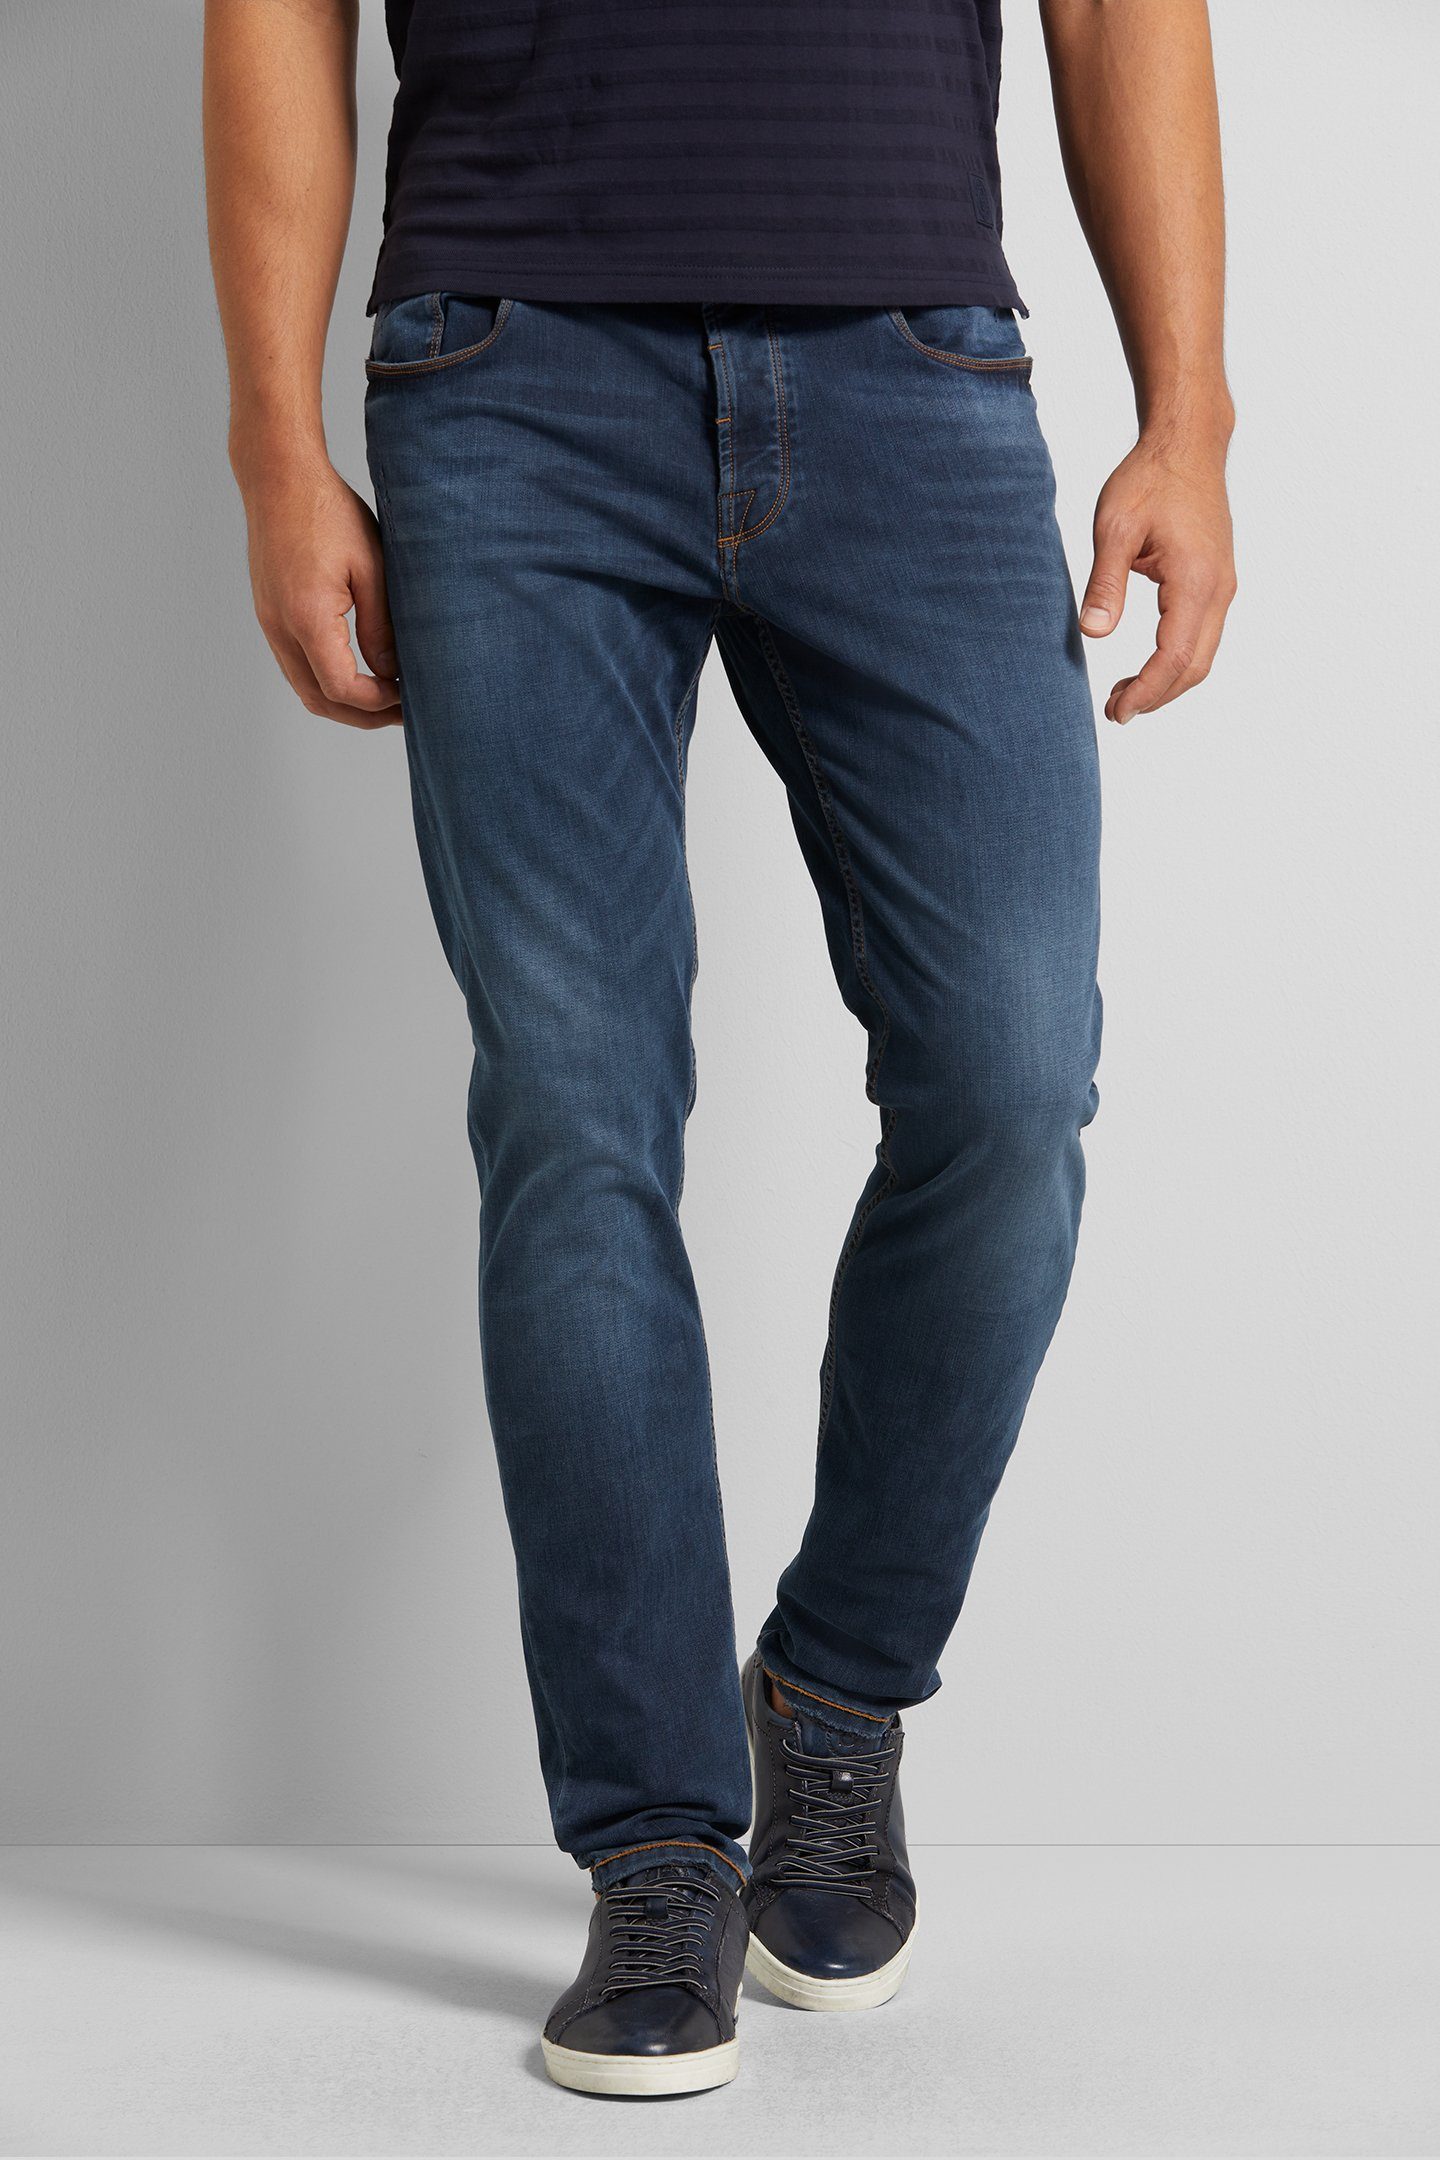 bugatti 5-Pocket-Jeans aus der Respect Nature Kollektion dunkelblau